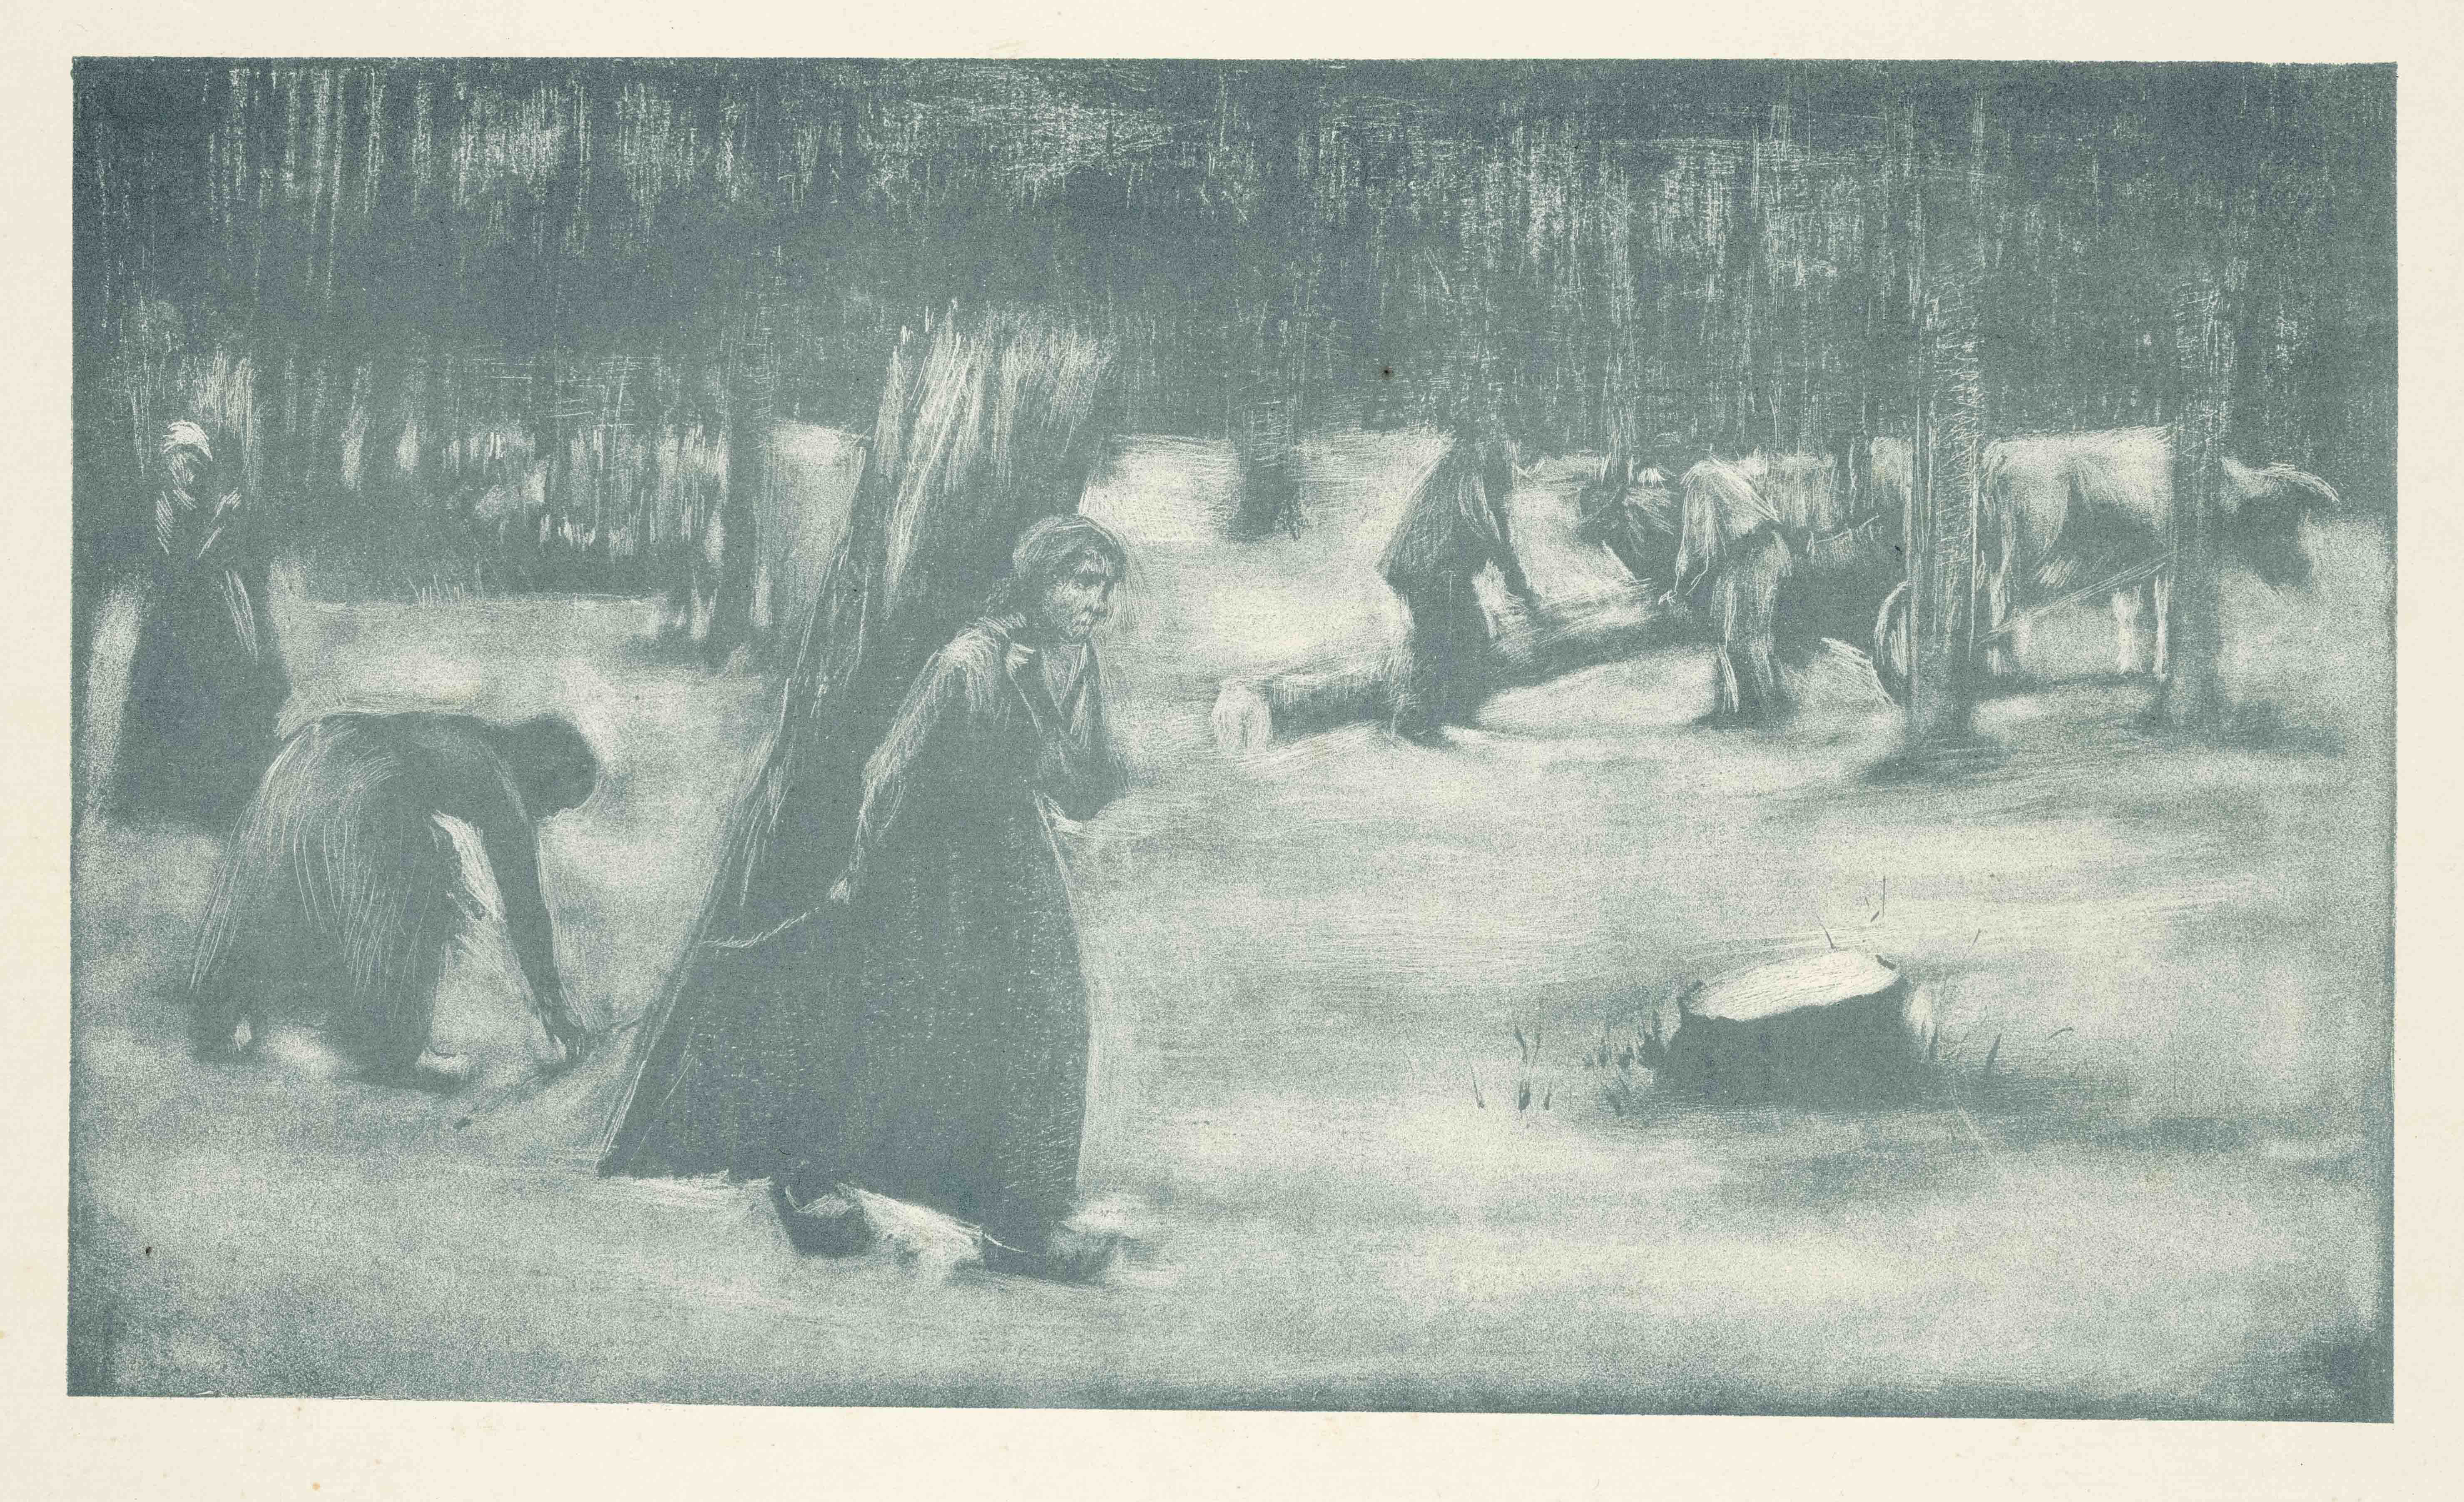 Max Liebermann (1847-1935), Holzsammler im Walde, lithograph on laid paper, published in Pan V,